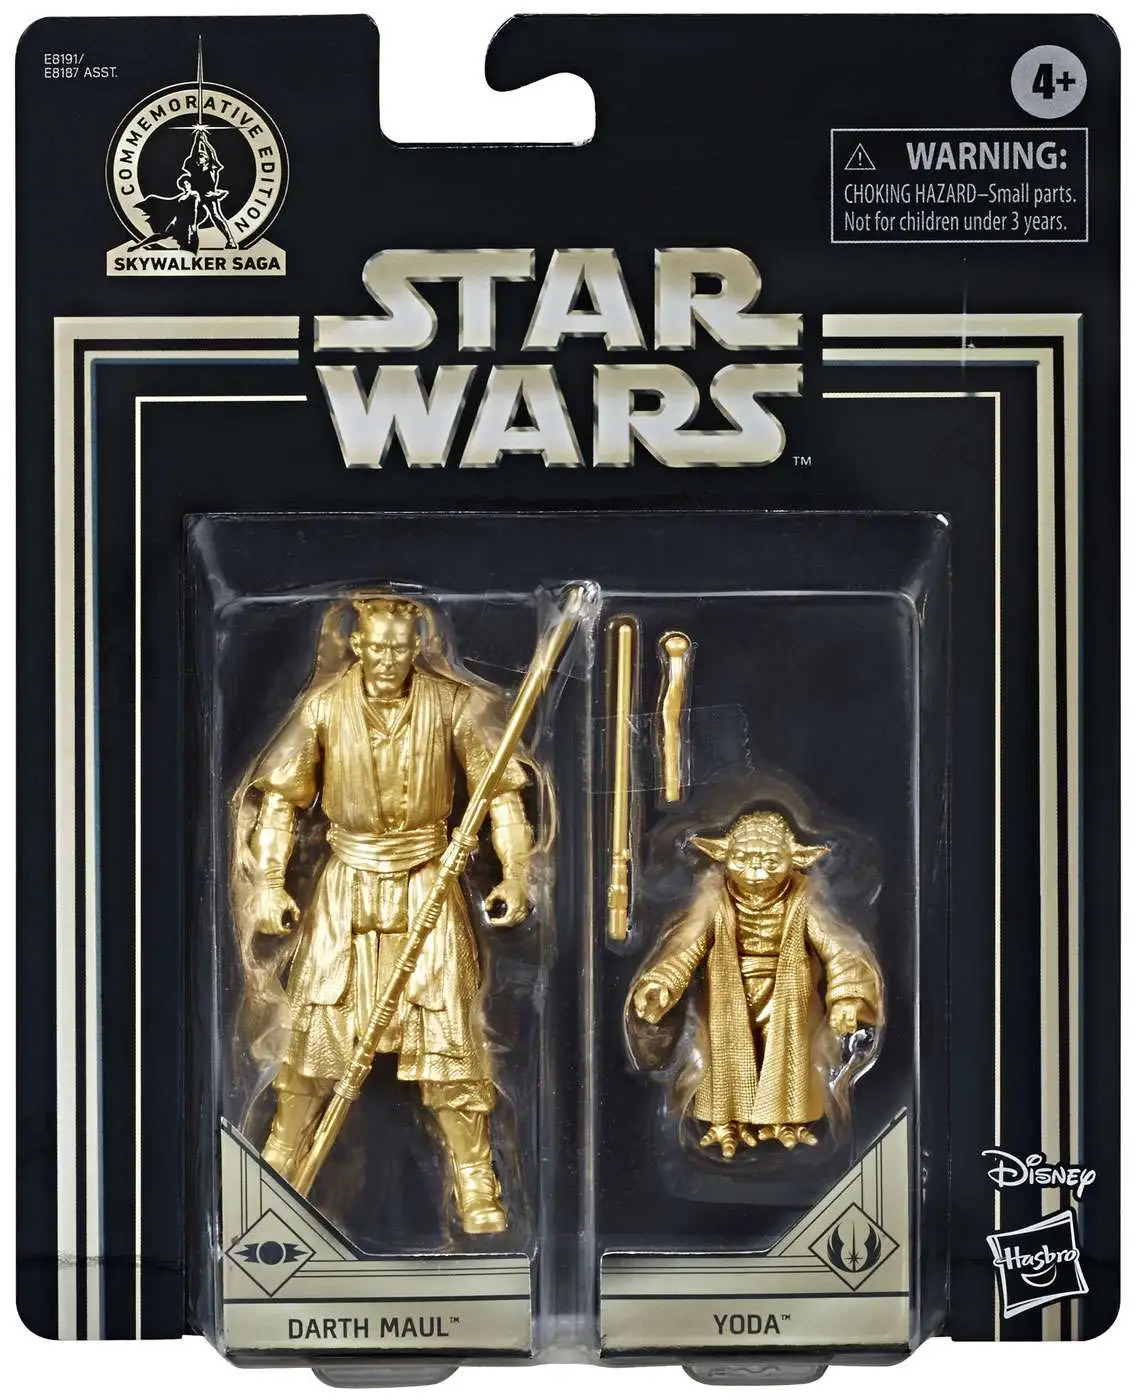 Star Wars Commemorative Edition Skywalker Saga Gold Kylo Ren and Rey Figures